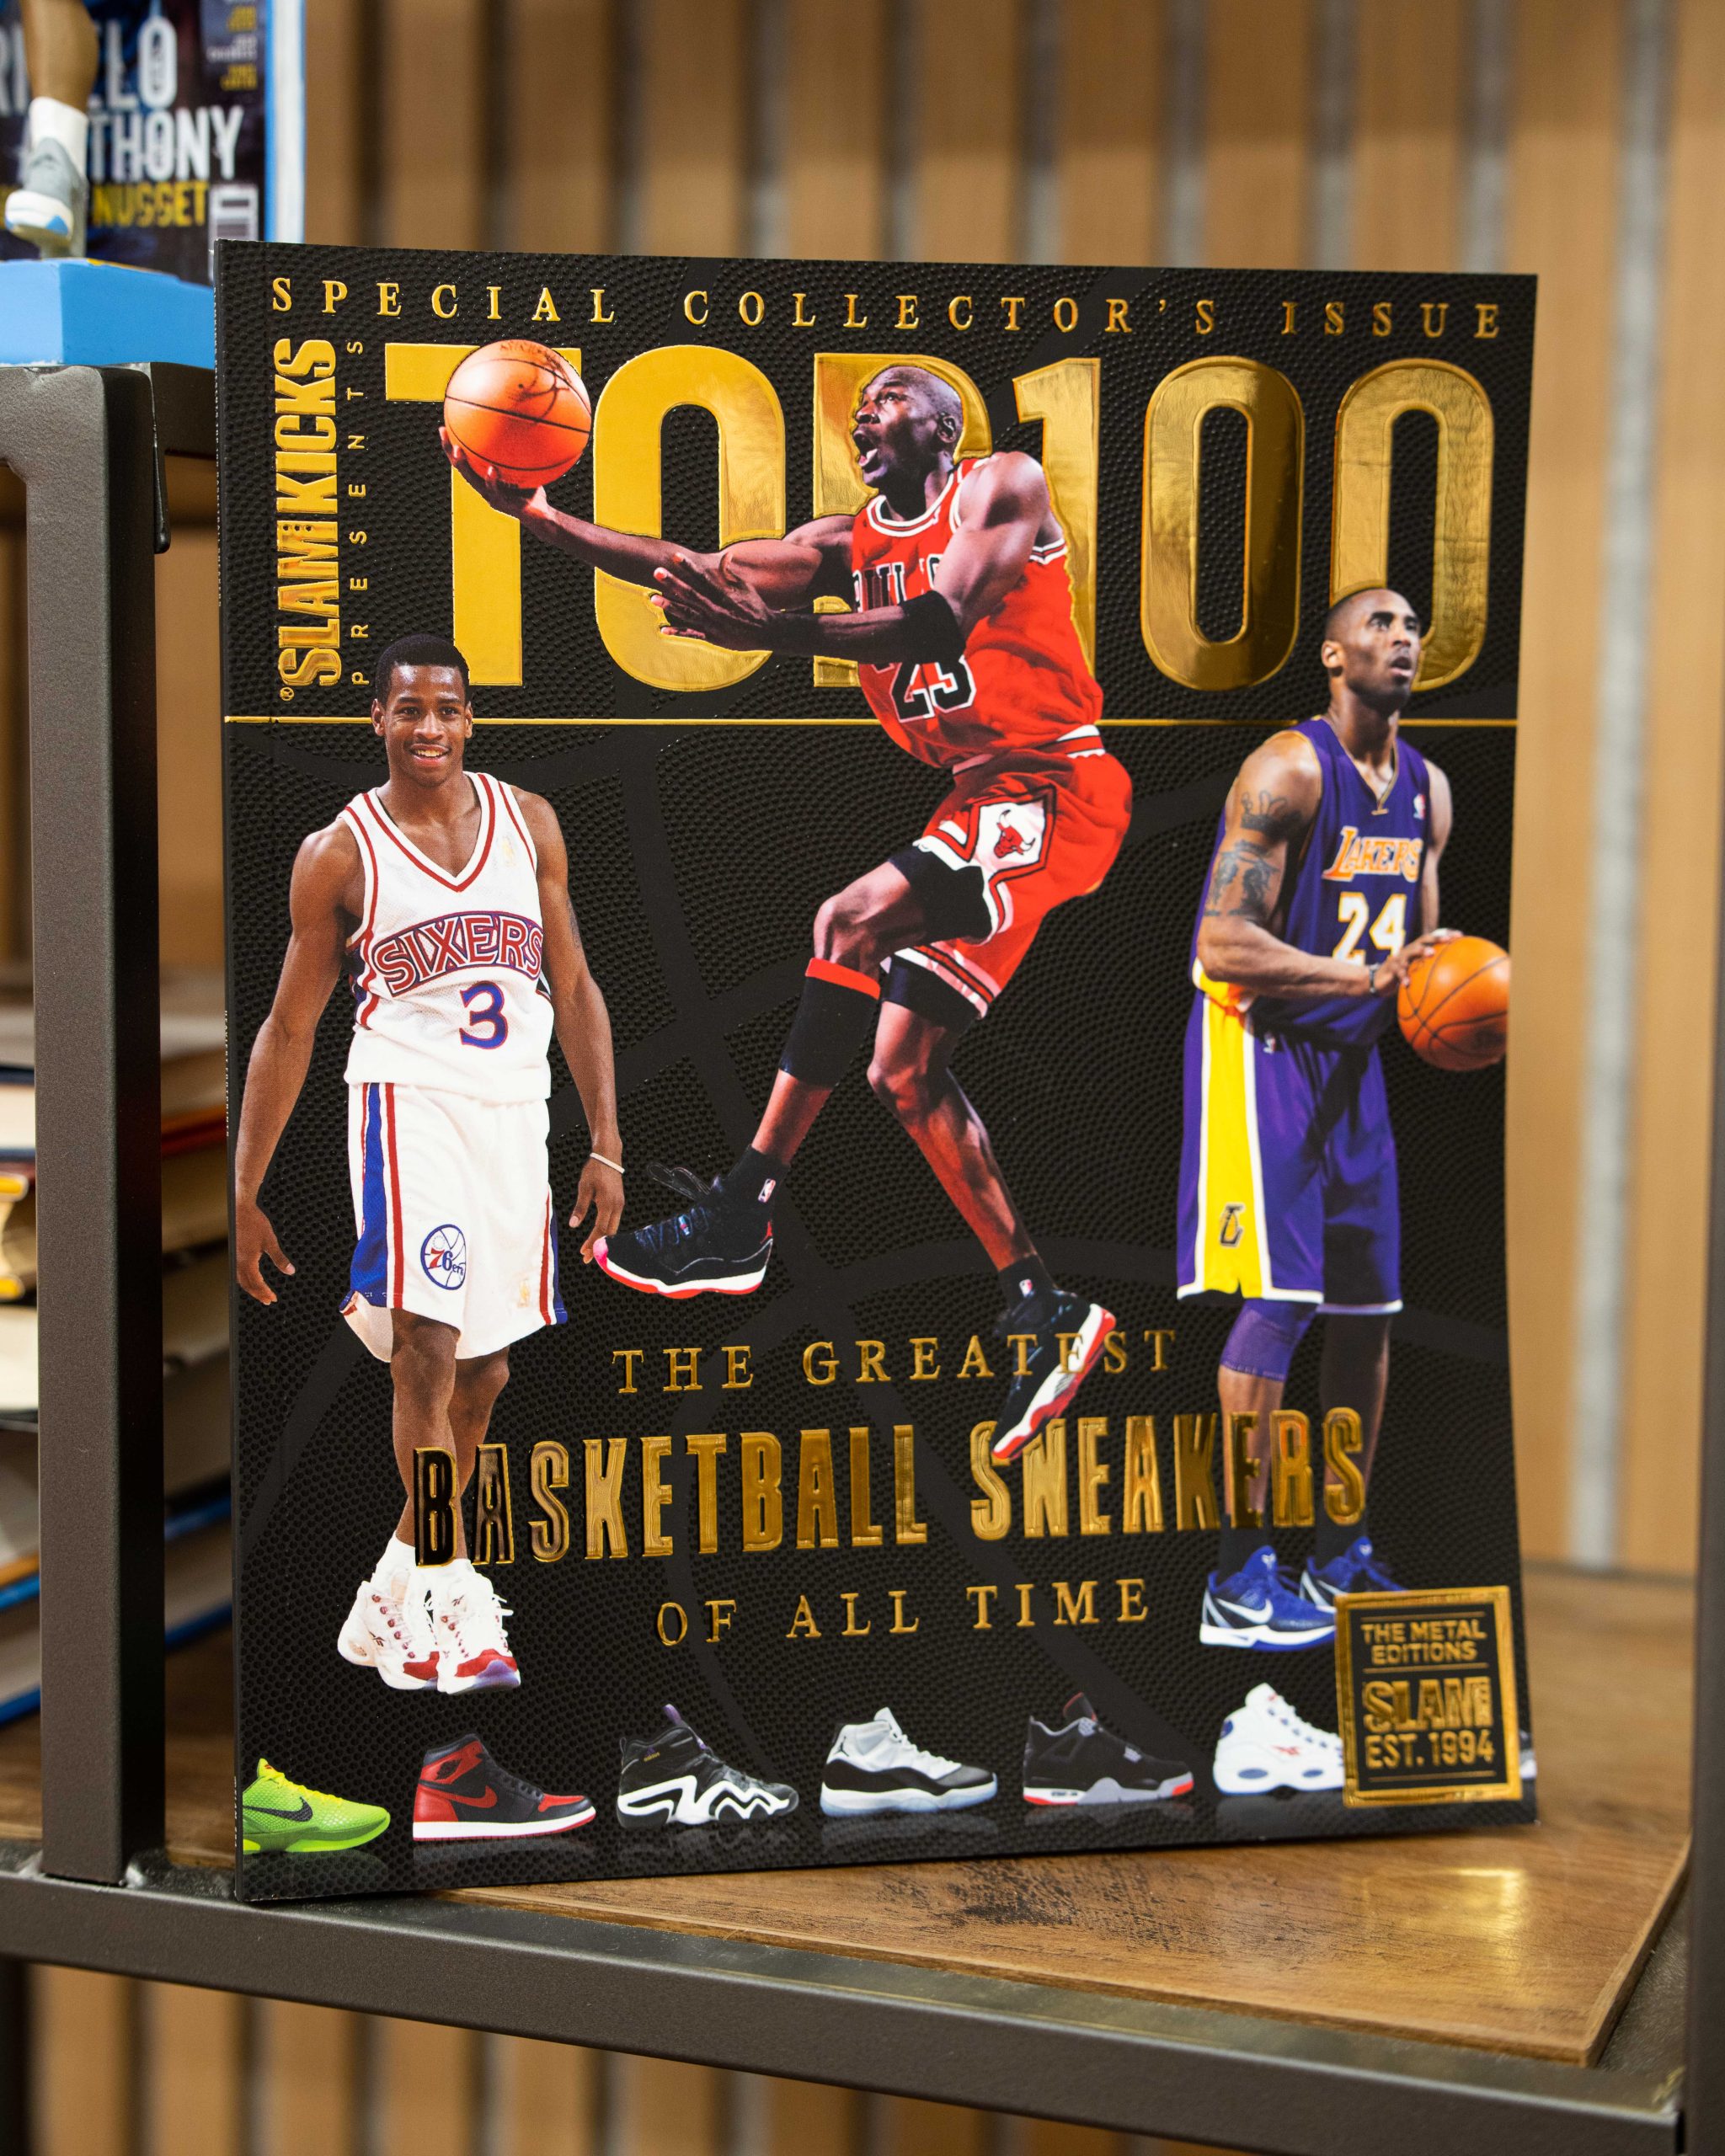 SLAMKICKS Presents TOP 100: Here’s What Basketball Sneaker We Ranked at No. 1